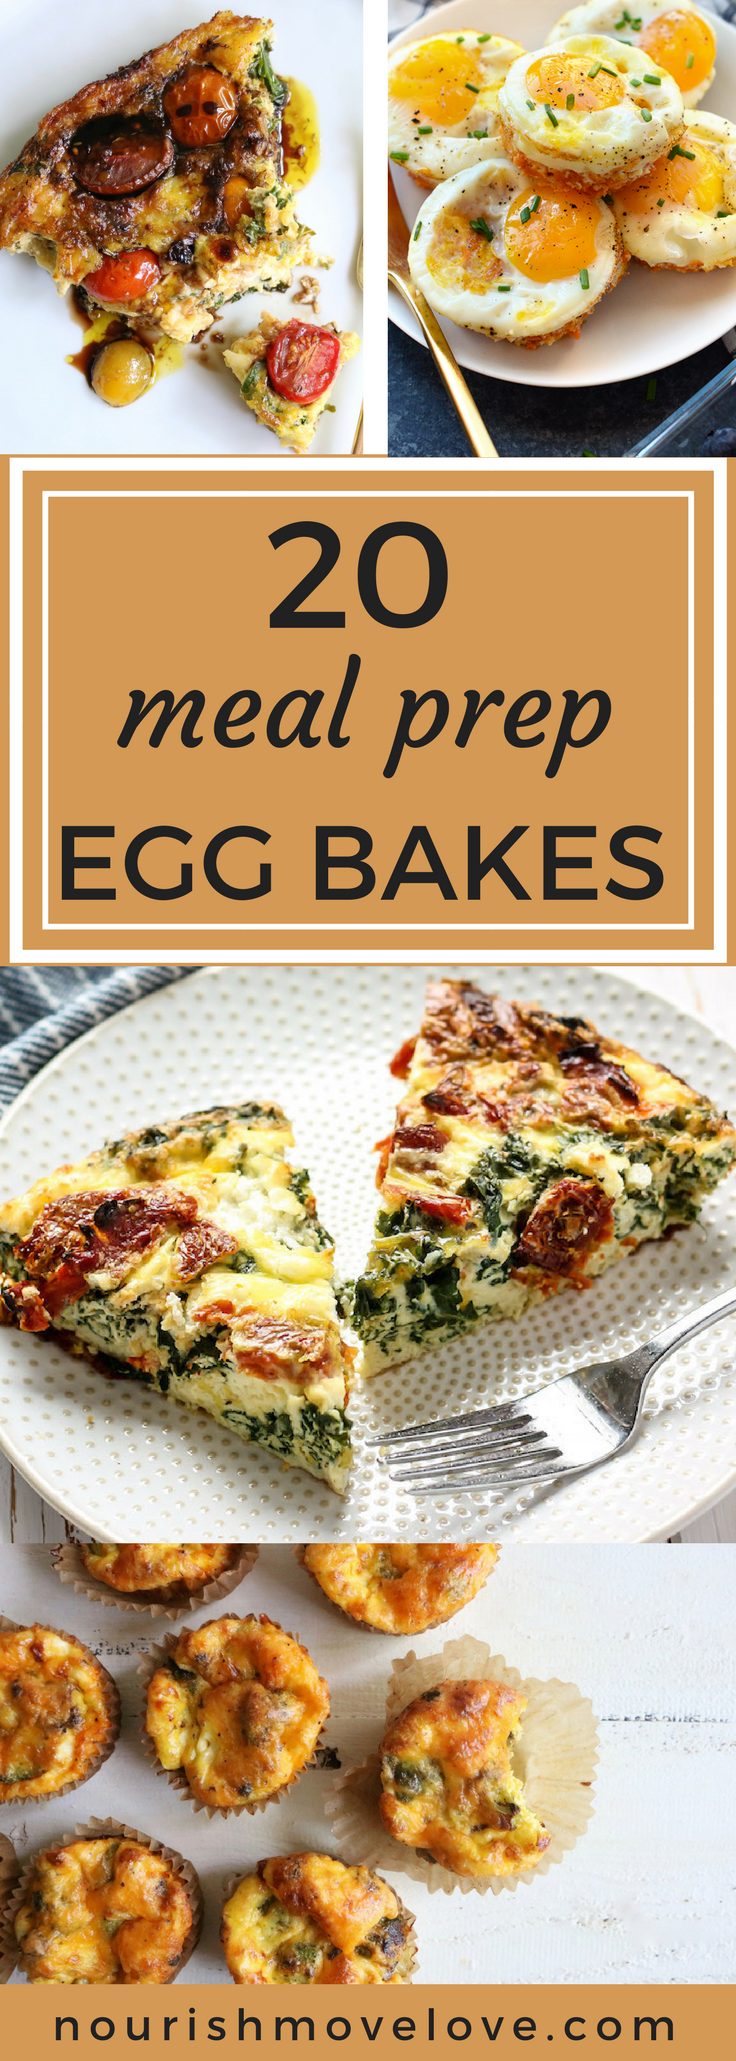 20 Healthy Meal Prep Egg Bake Recipes | www.nourishmovelove.com